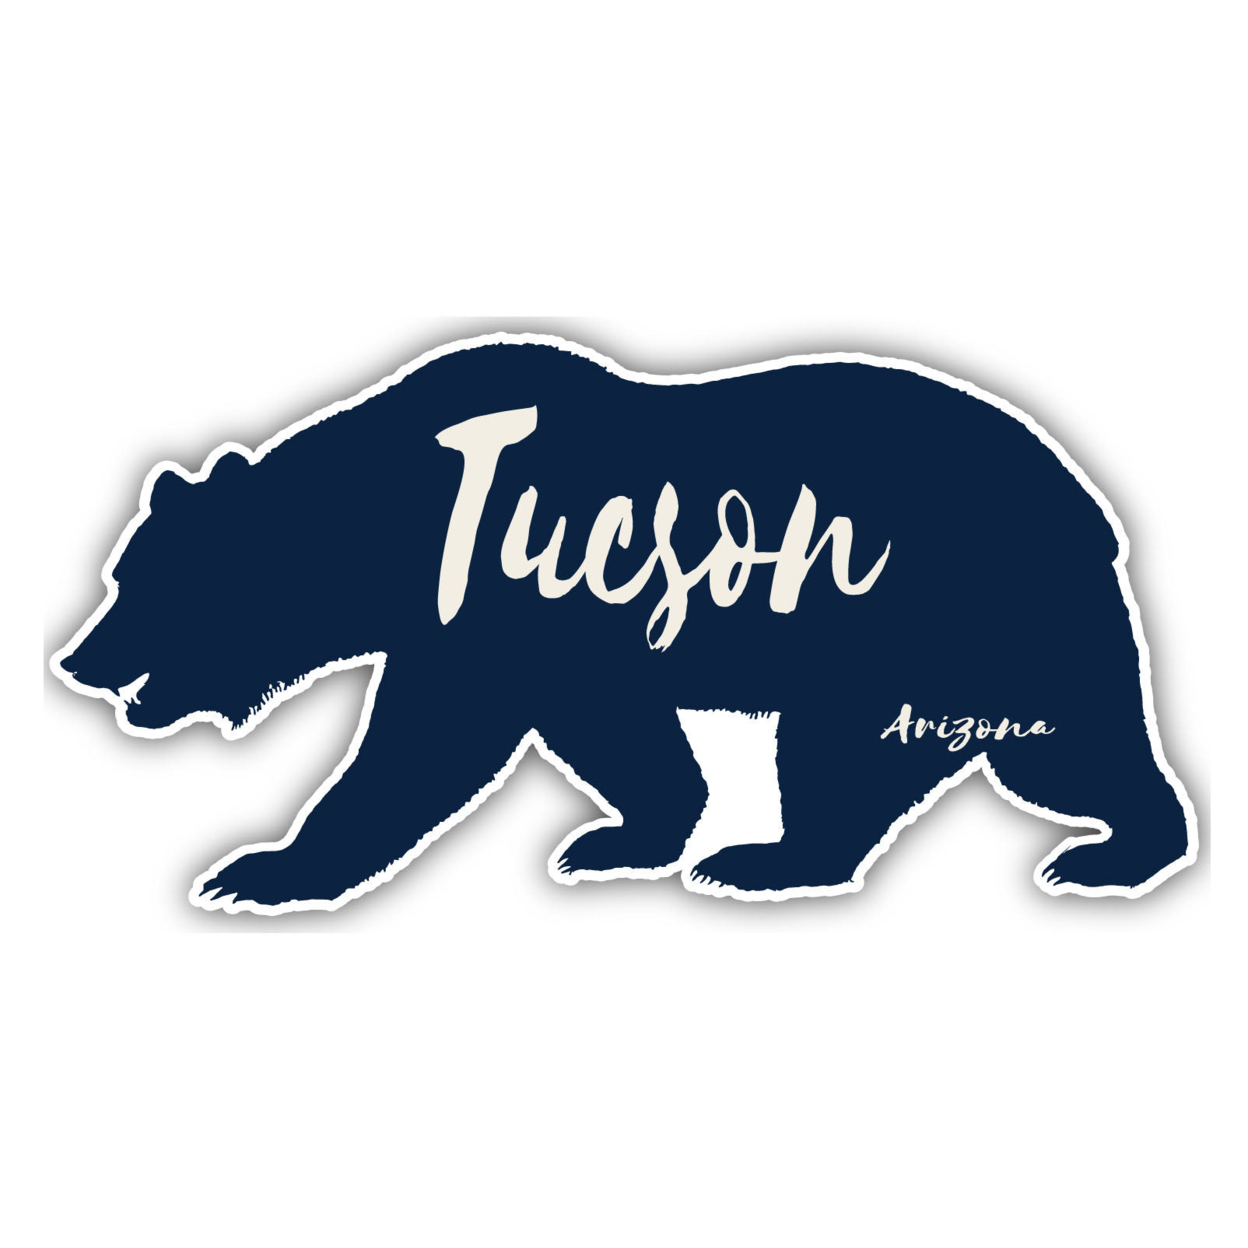 Tucson Arizona Souvenir Decorative Stickers (Choose Theme And Size) - Single Unit, 2-Inch, Bear